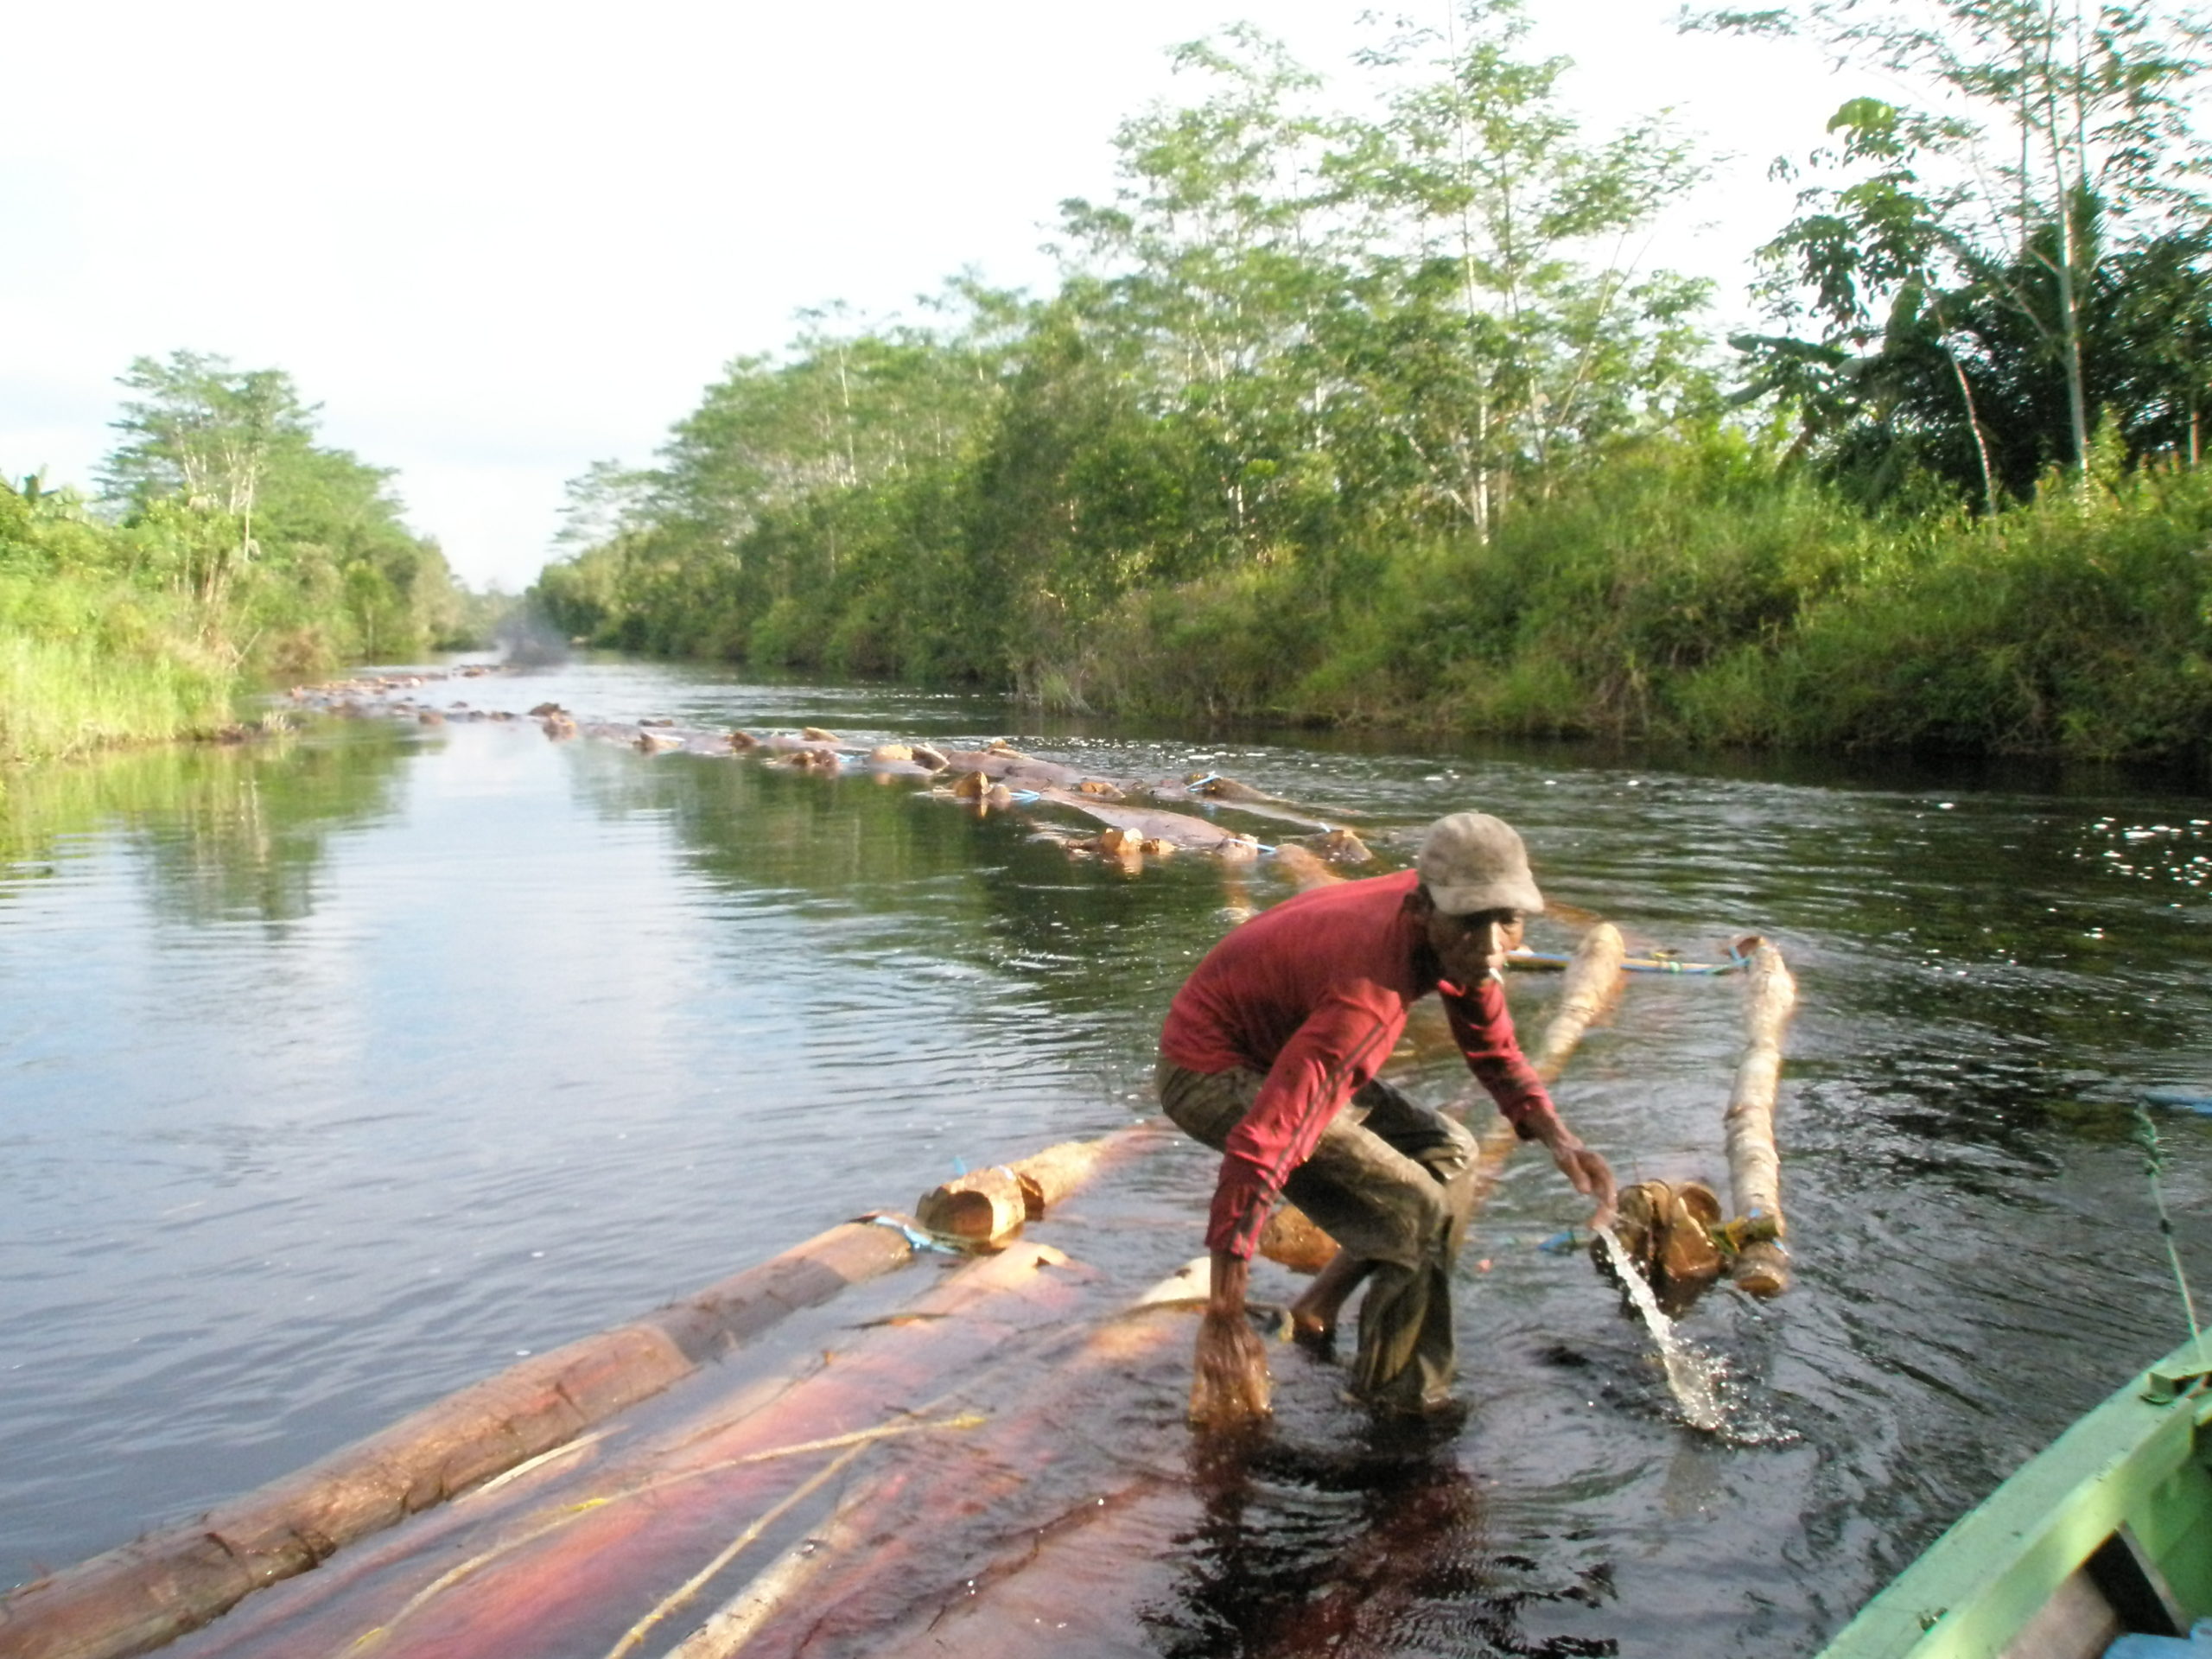 Progress and perils in Indonesia’s peatland restoration journey